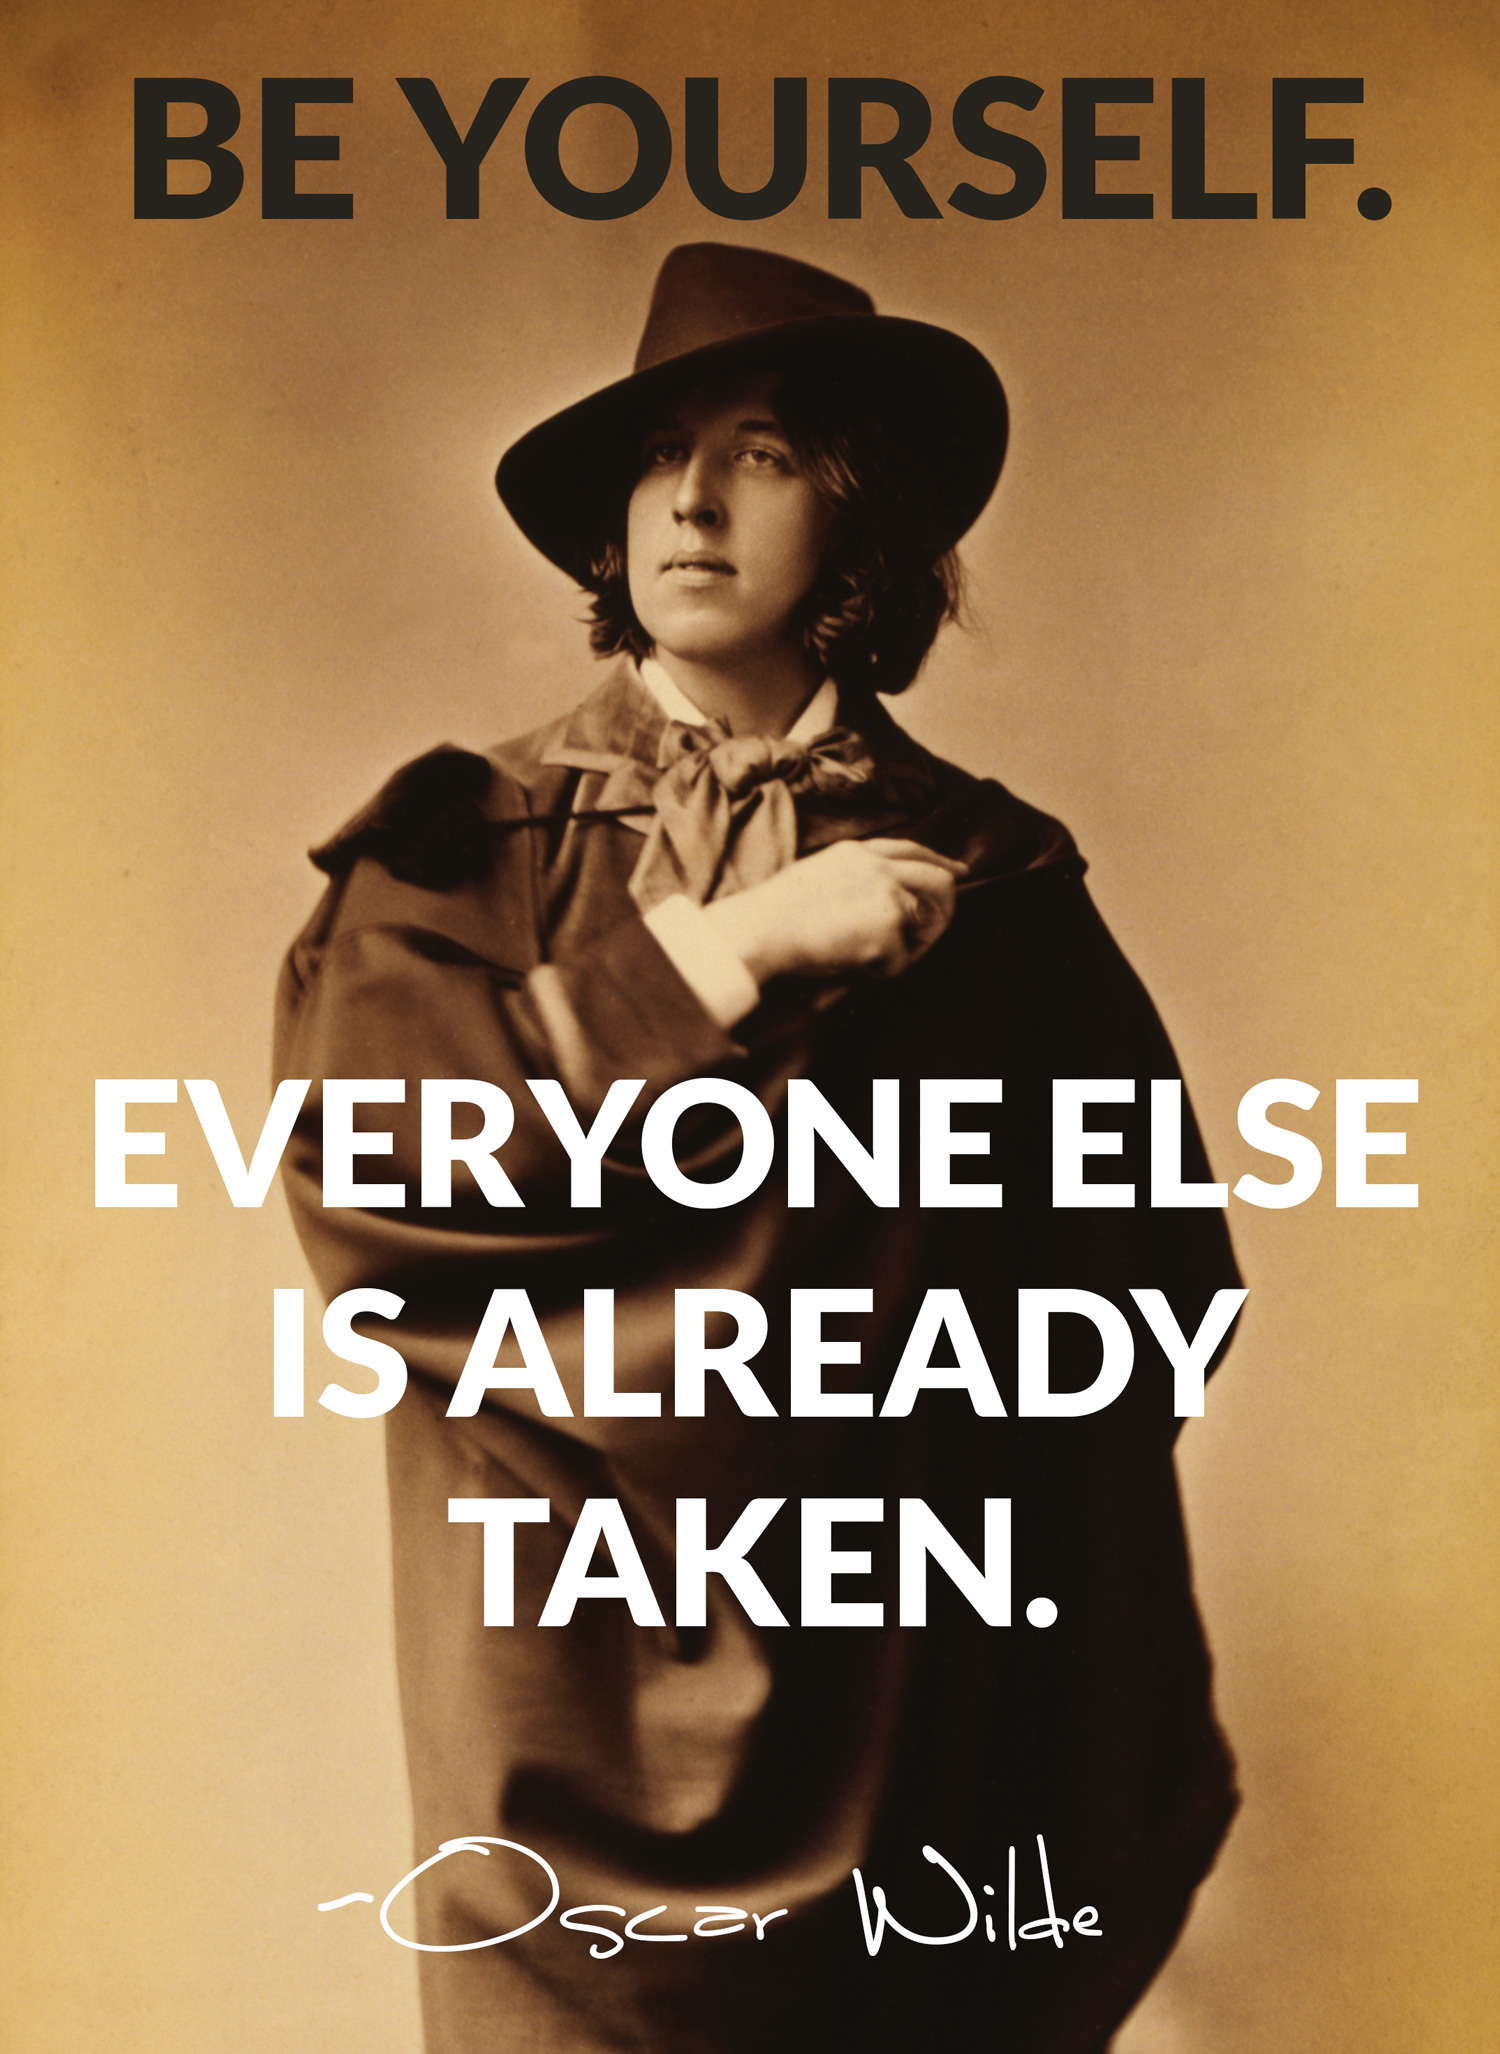 Oscar Wilde - Be Yourself. Everyone else is already taken.